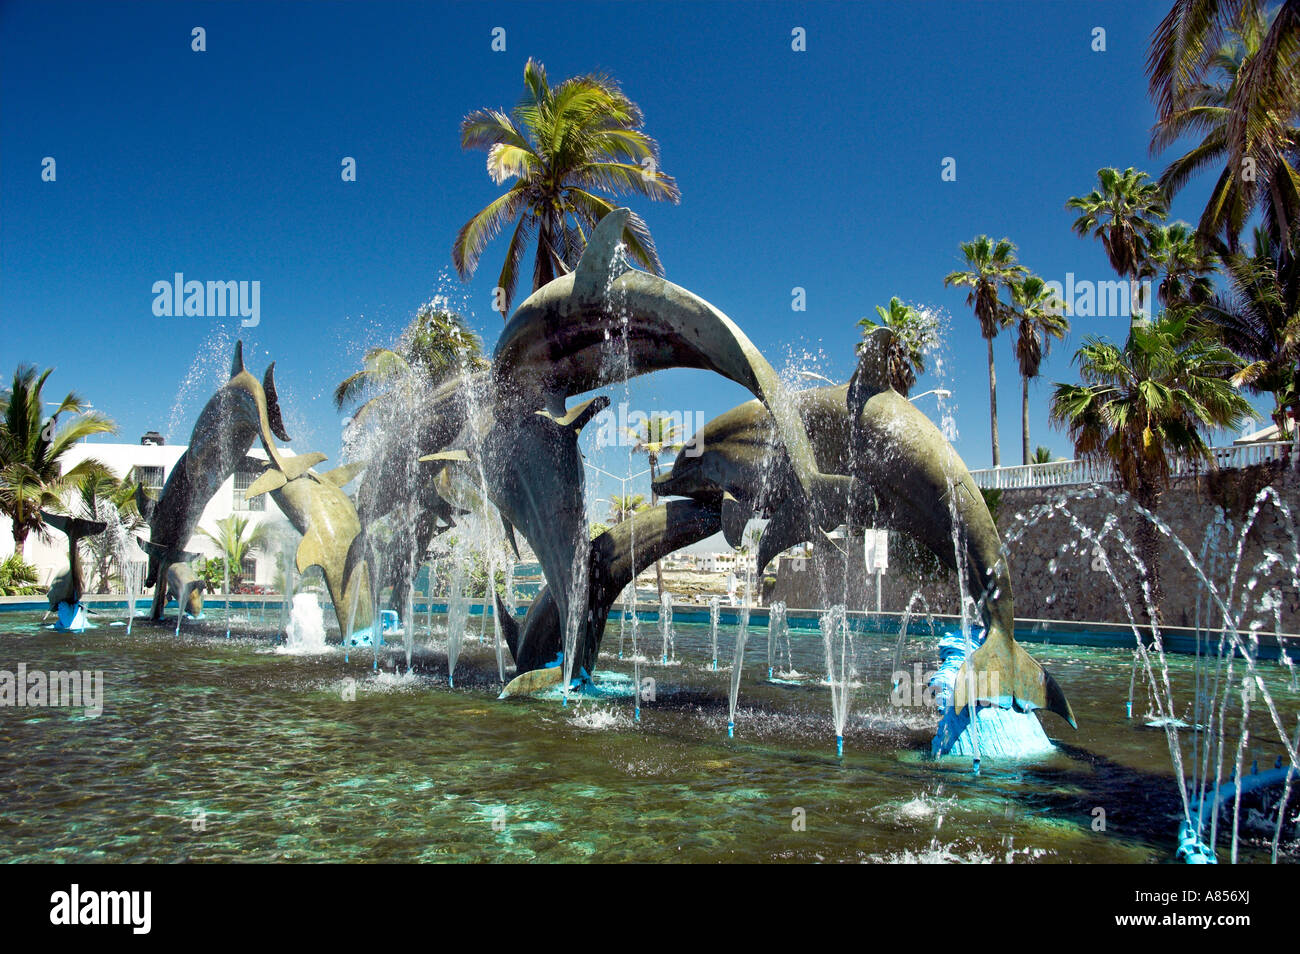 A dolphin sculpture exhibit in a small park along the malecon in Mazatlan Mexico Stock Photo